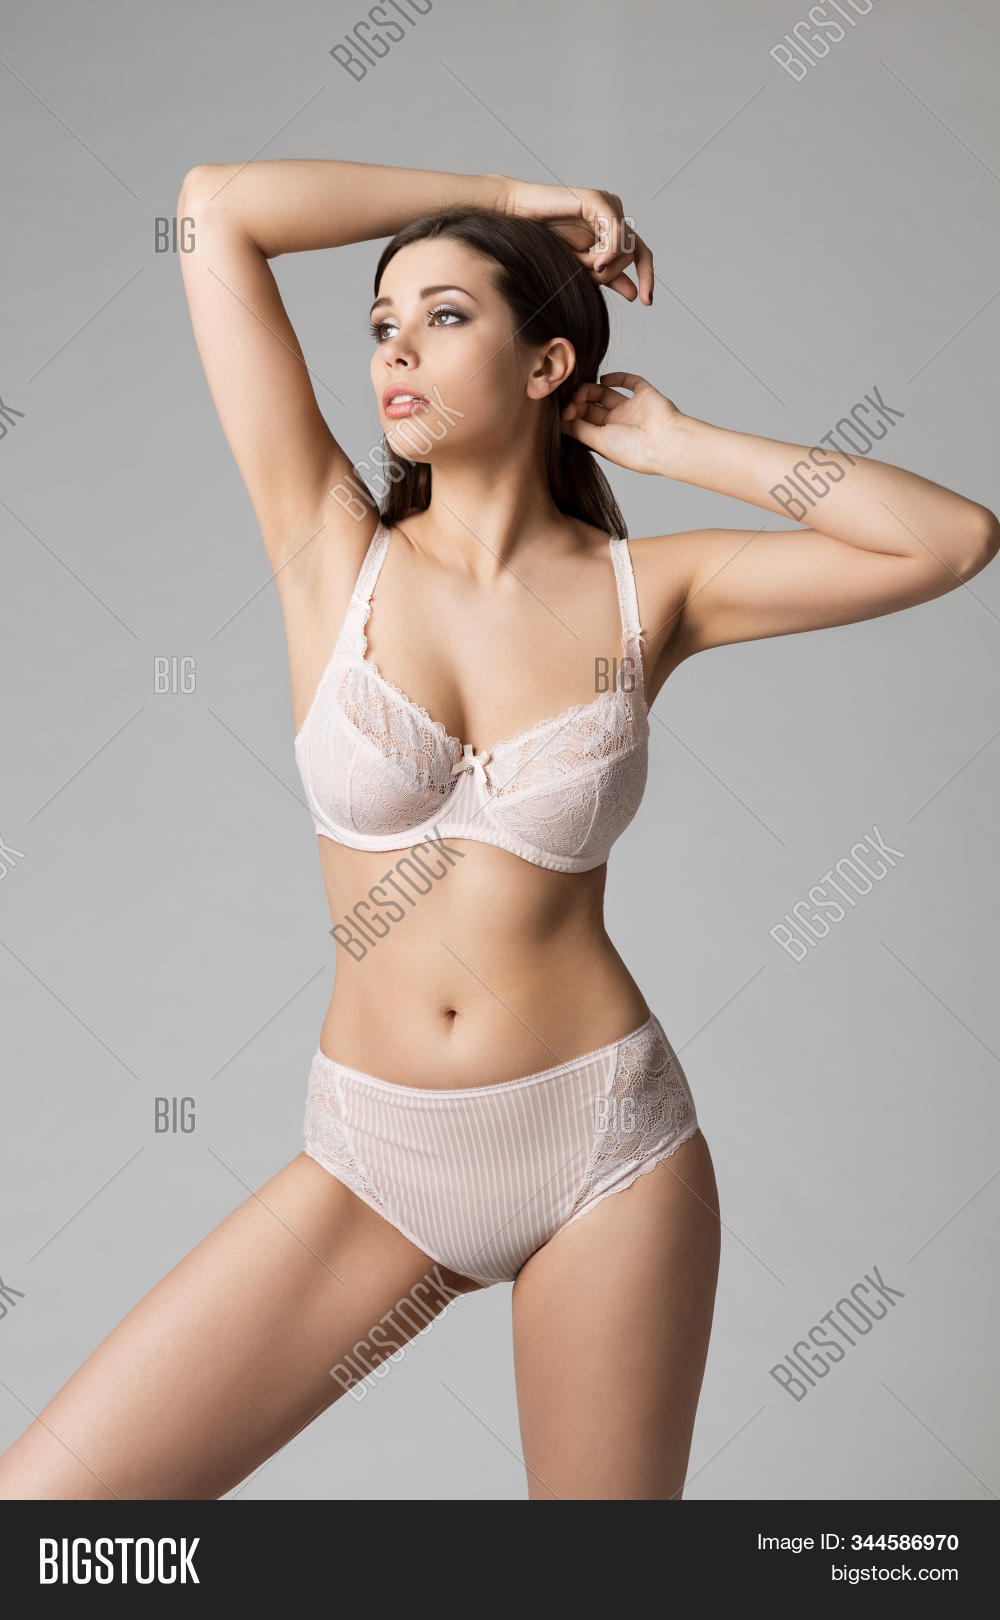 cristi danciu share sexy models in panties photos